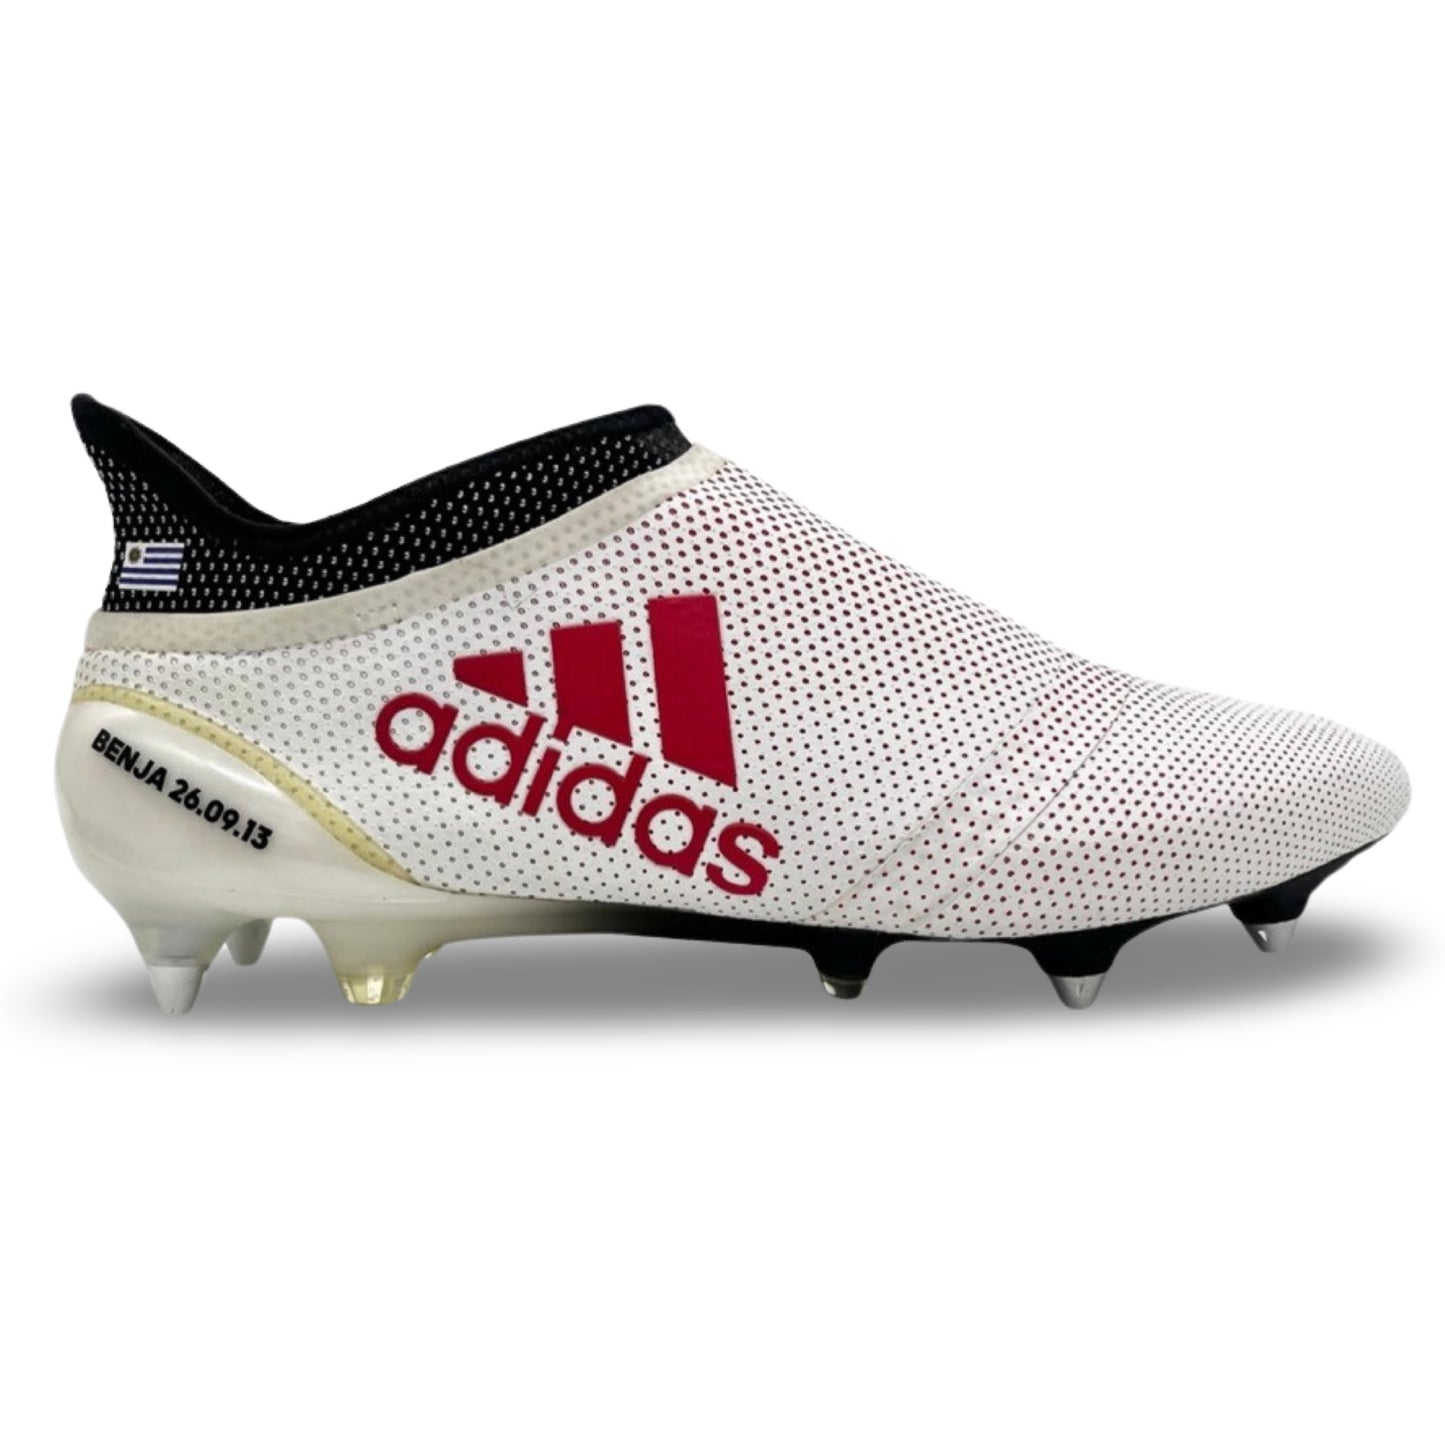 Luis Suarez Match Adidas X17+ Purespeed usado